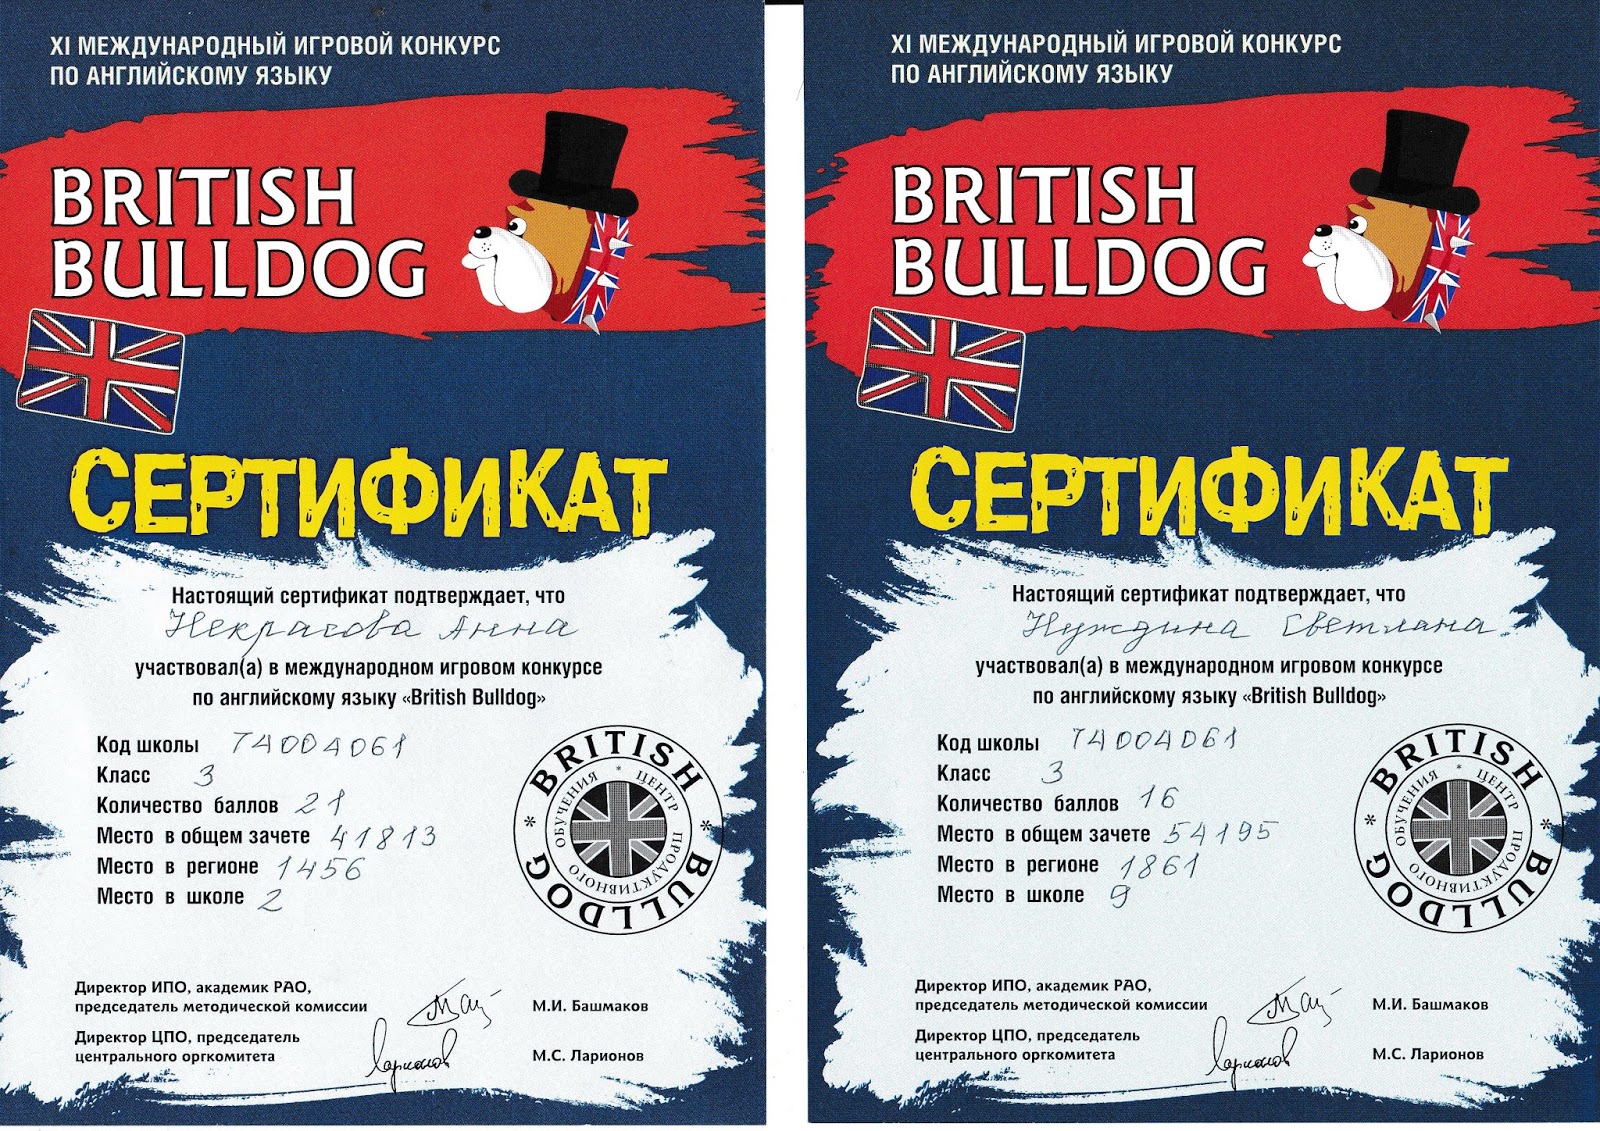 Бульдог конкурс по английскому языку. Бритиш бульдог сертификаты 2021. British Bulldog сертификат. Британский бульдог грамота.